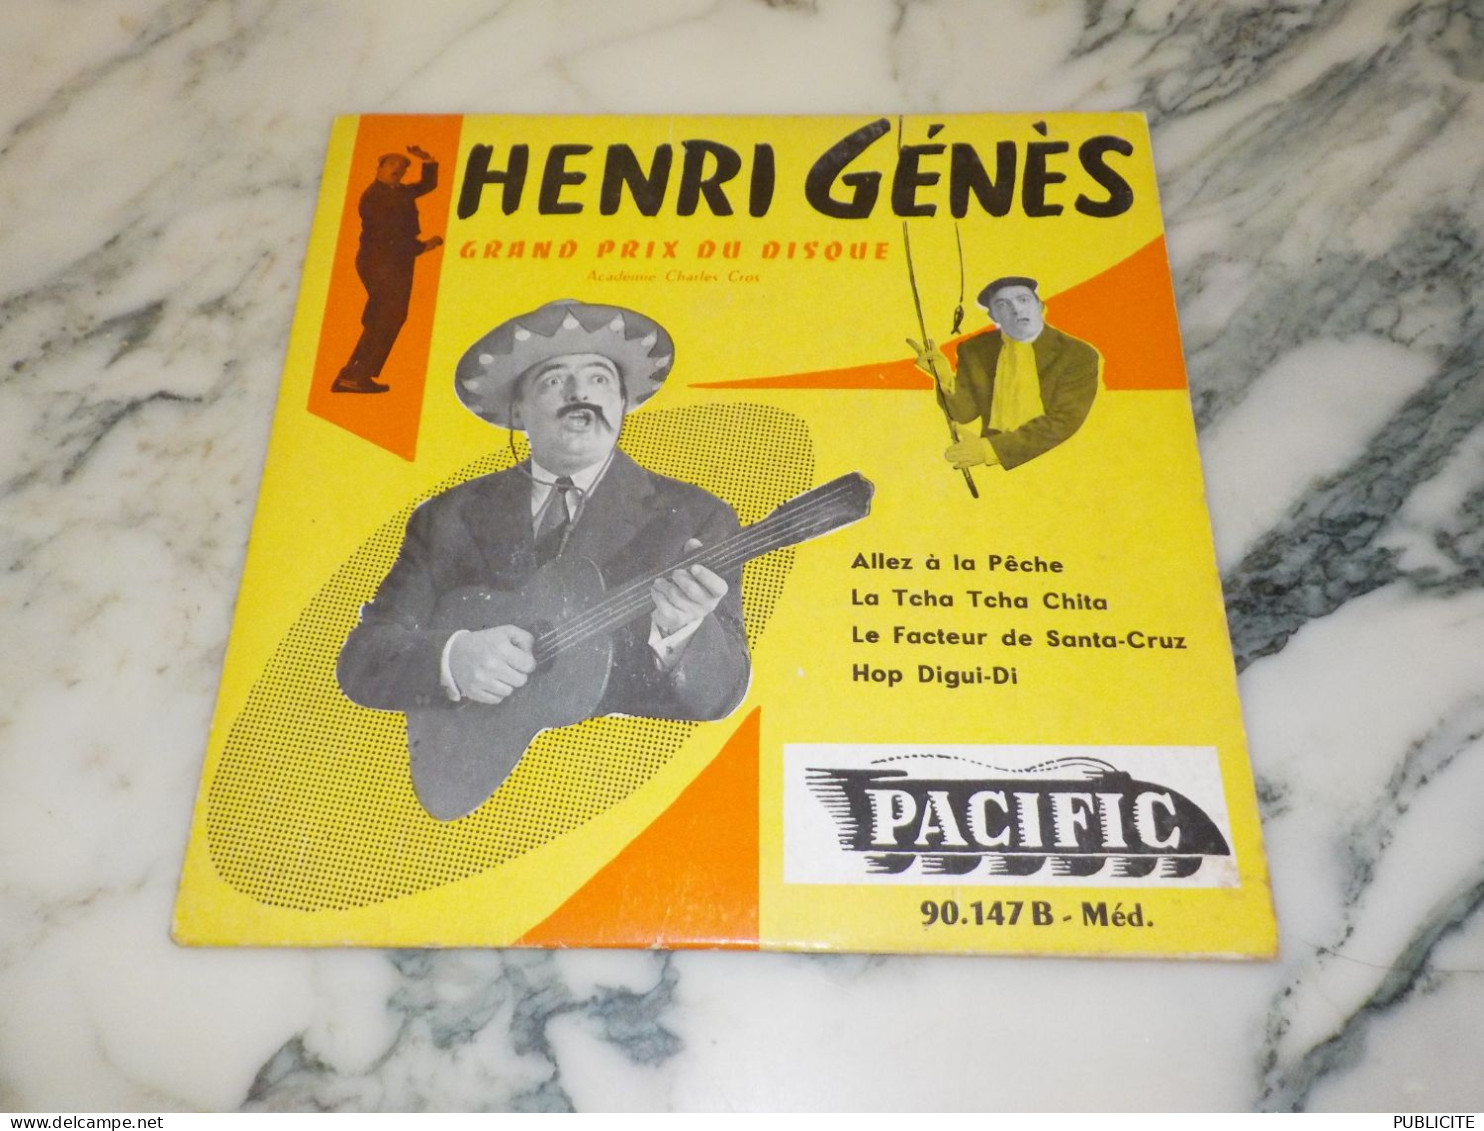 45 TOURS GRAND PRIX DU DISQUE HENRI GENES 1955 - Humor, Cabaret